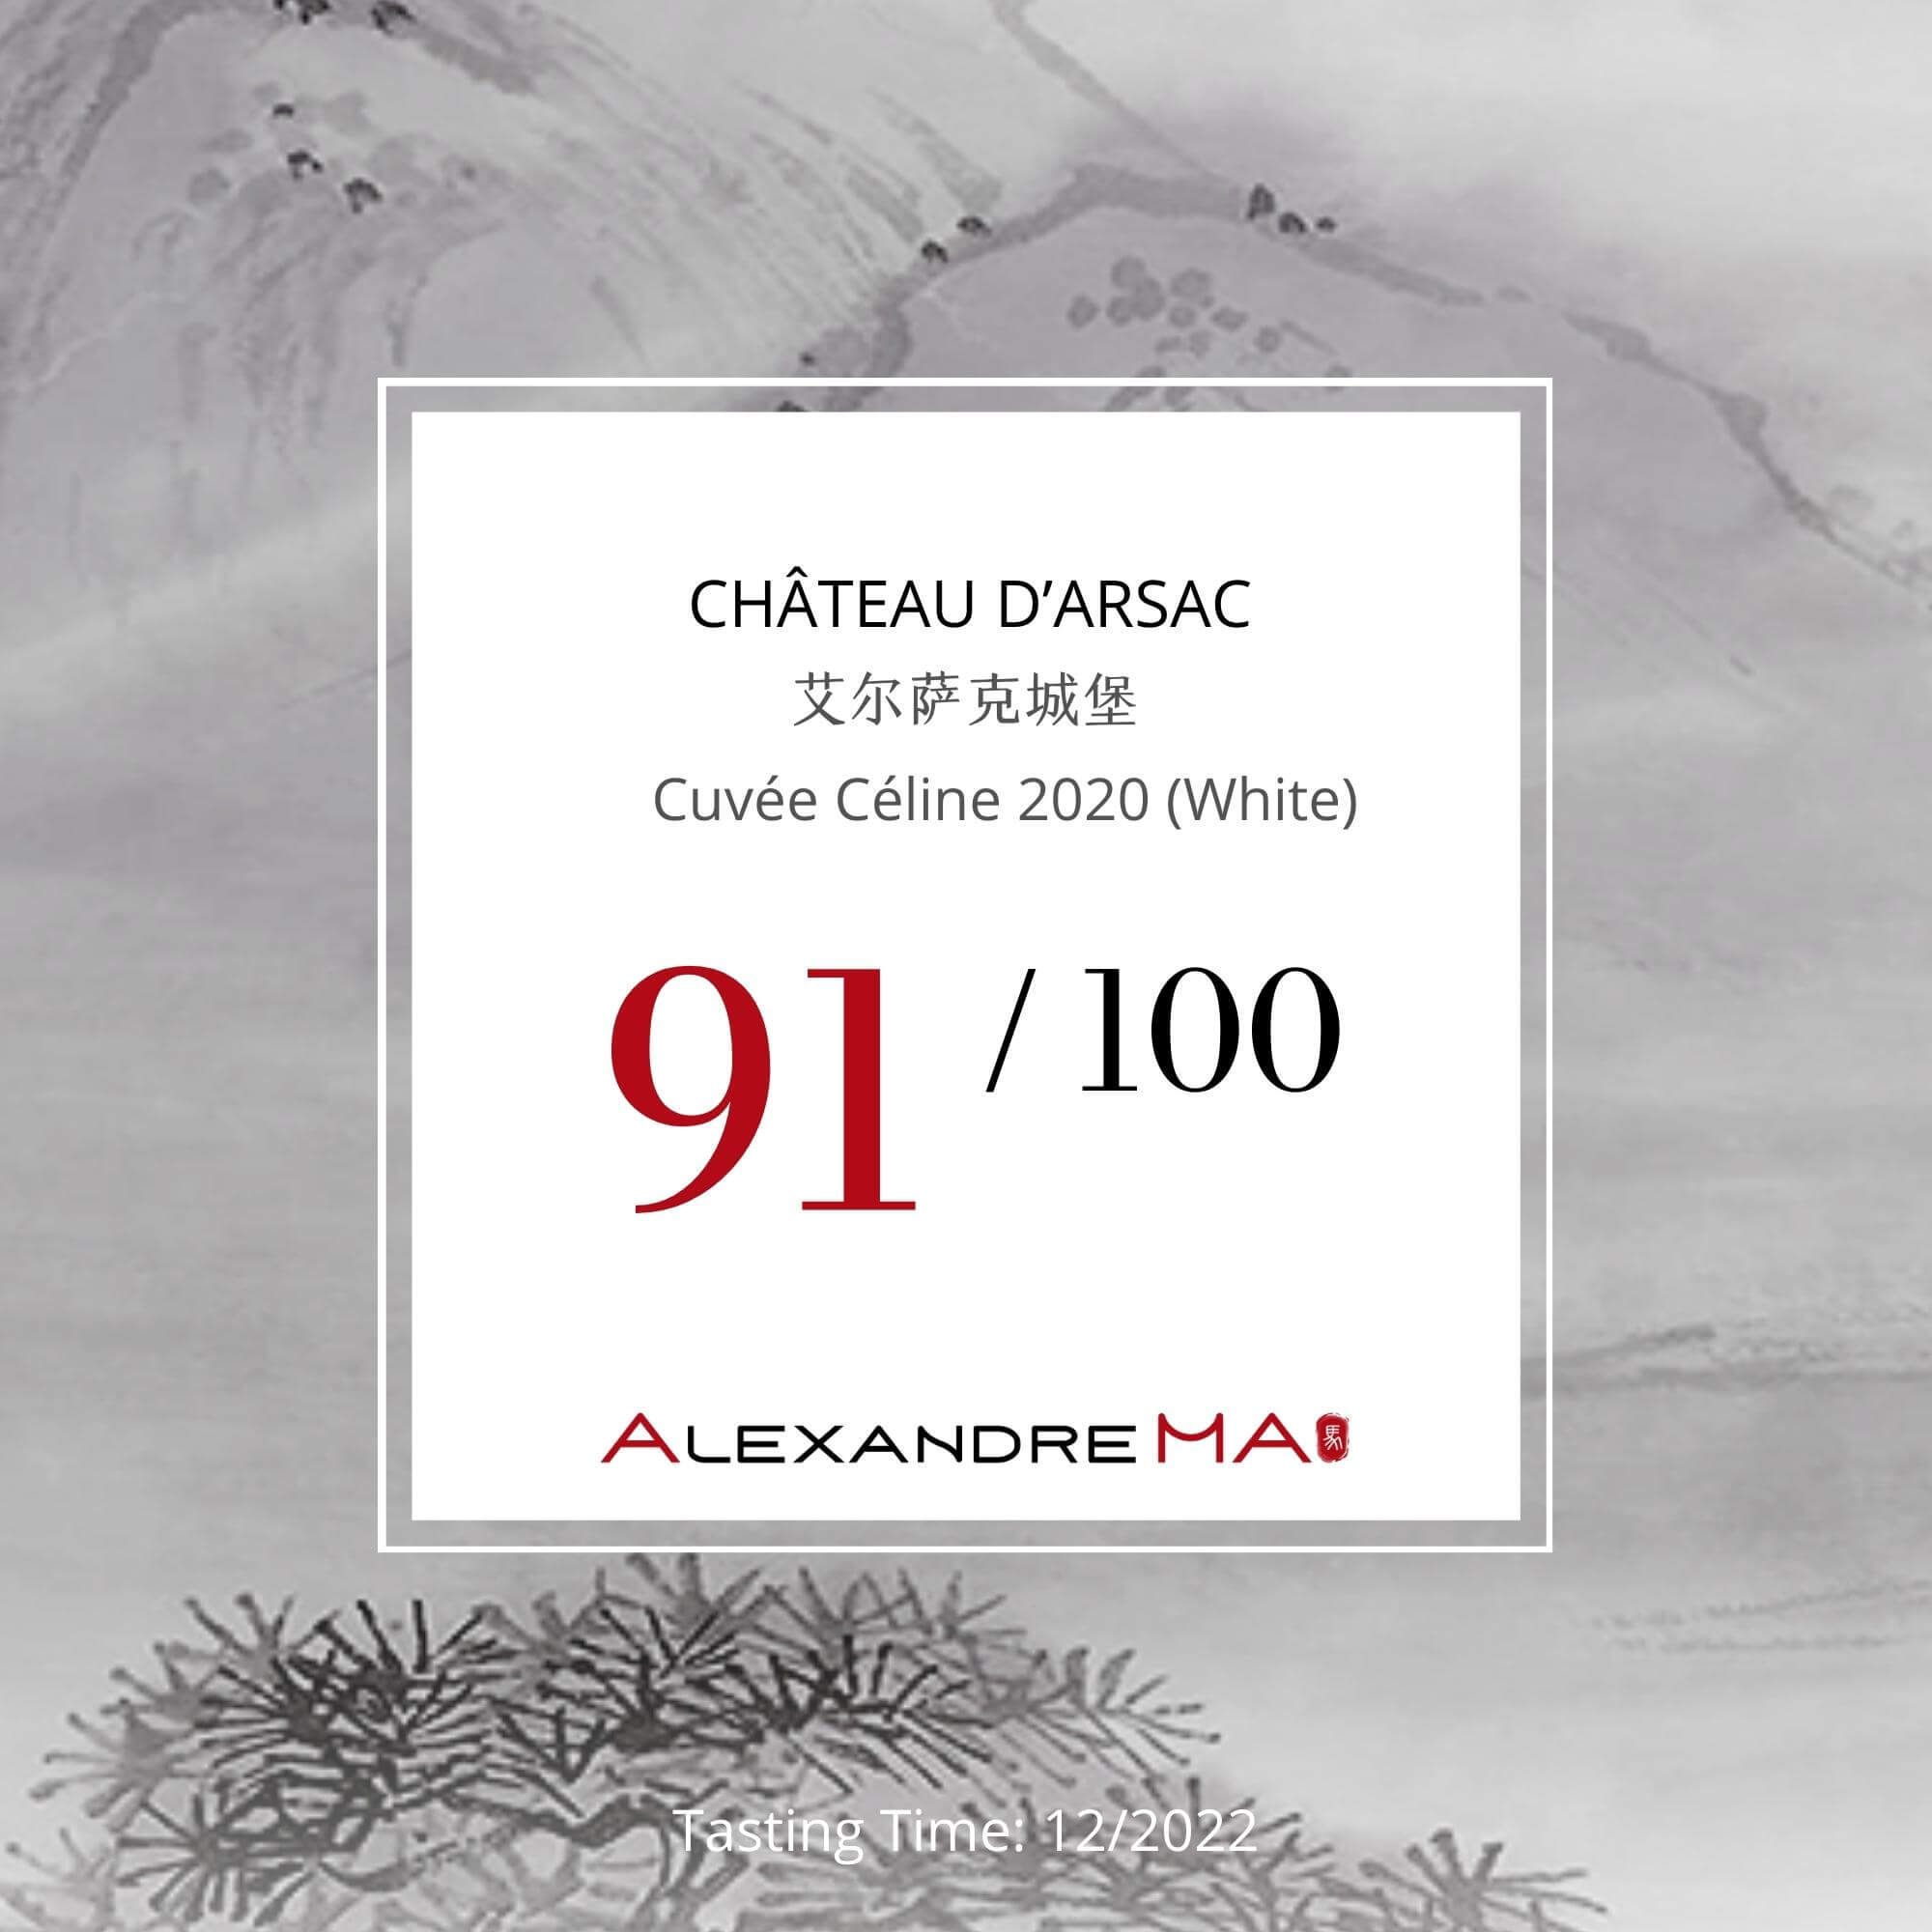 Château d’Arsac 2020 艾尔萨克城堡 - Alexandre Ma